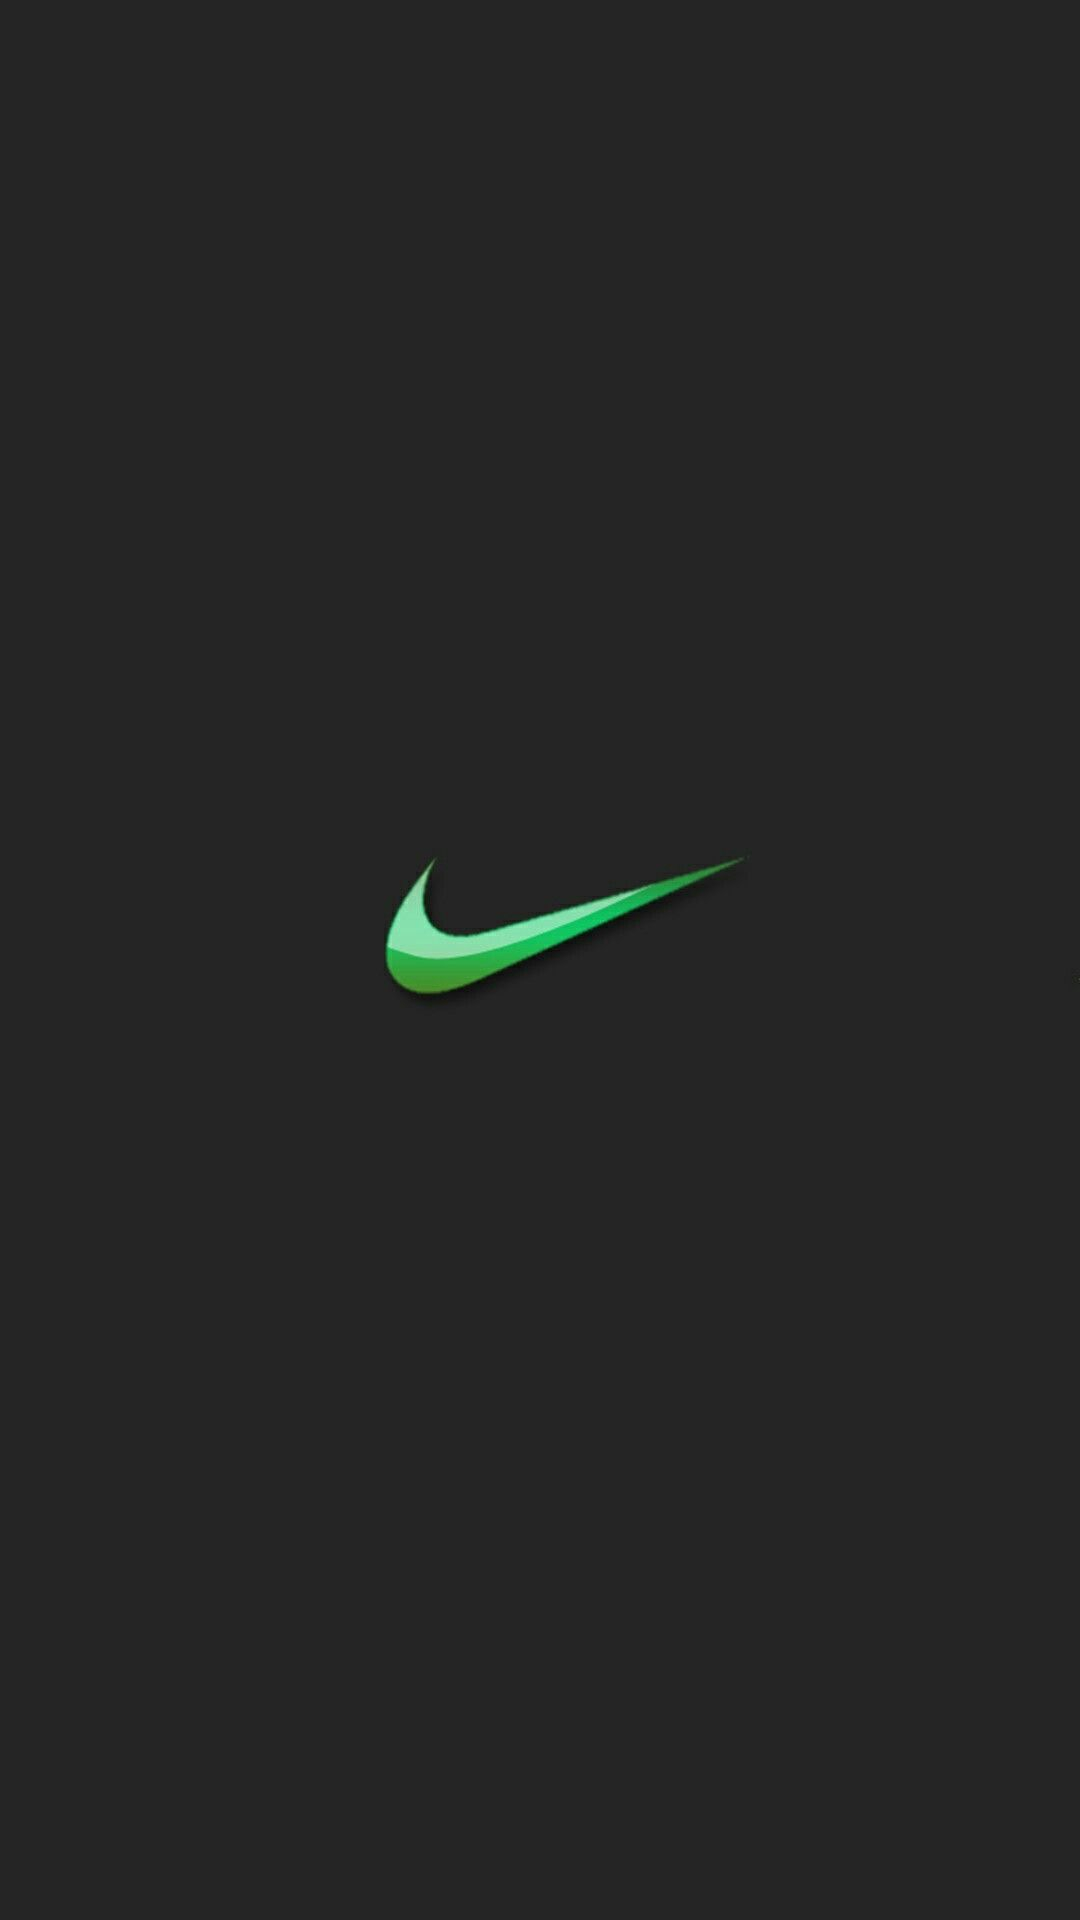 1080x1920 Pin by hamdan muhammed on LOGOS | Nike wallpaper, Nike logo wallpapers, Nike